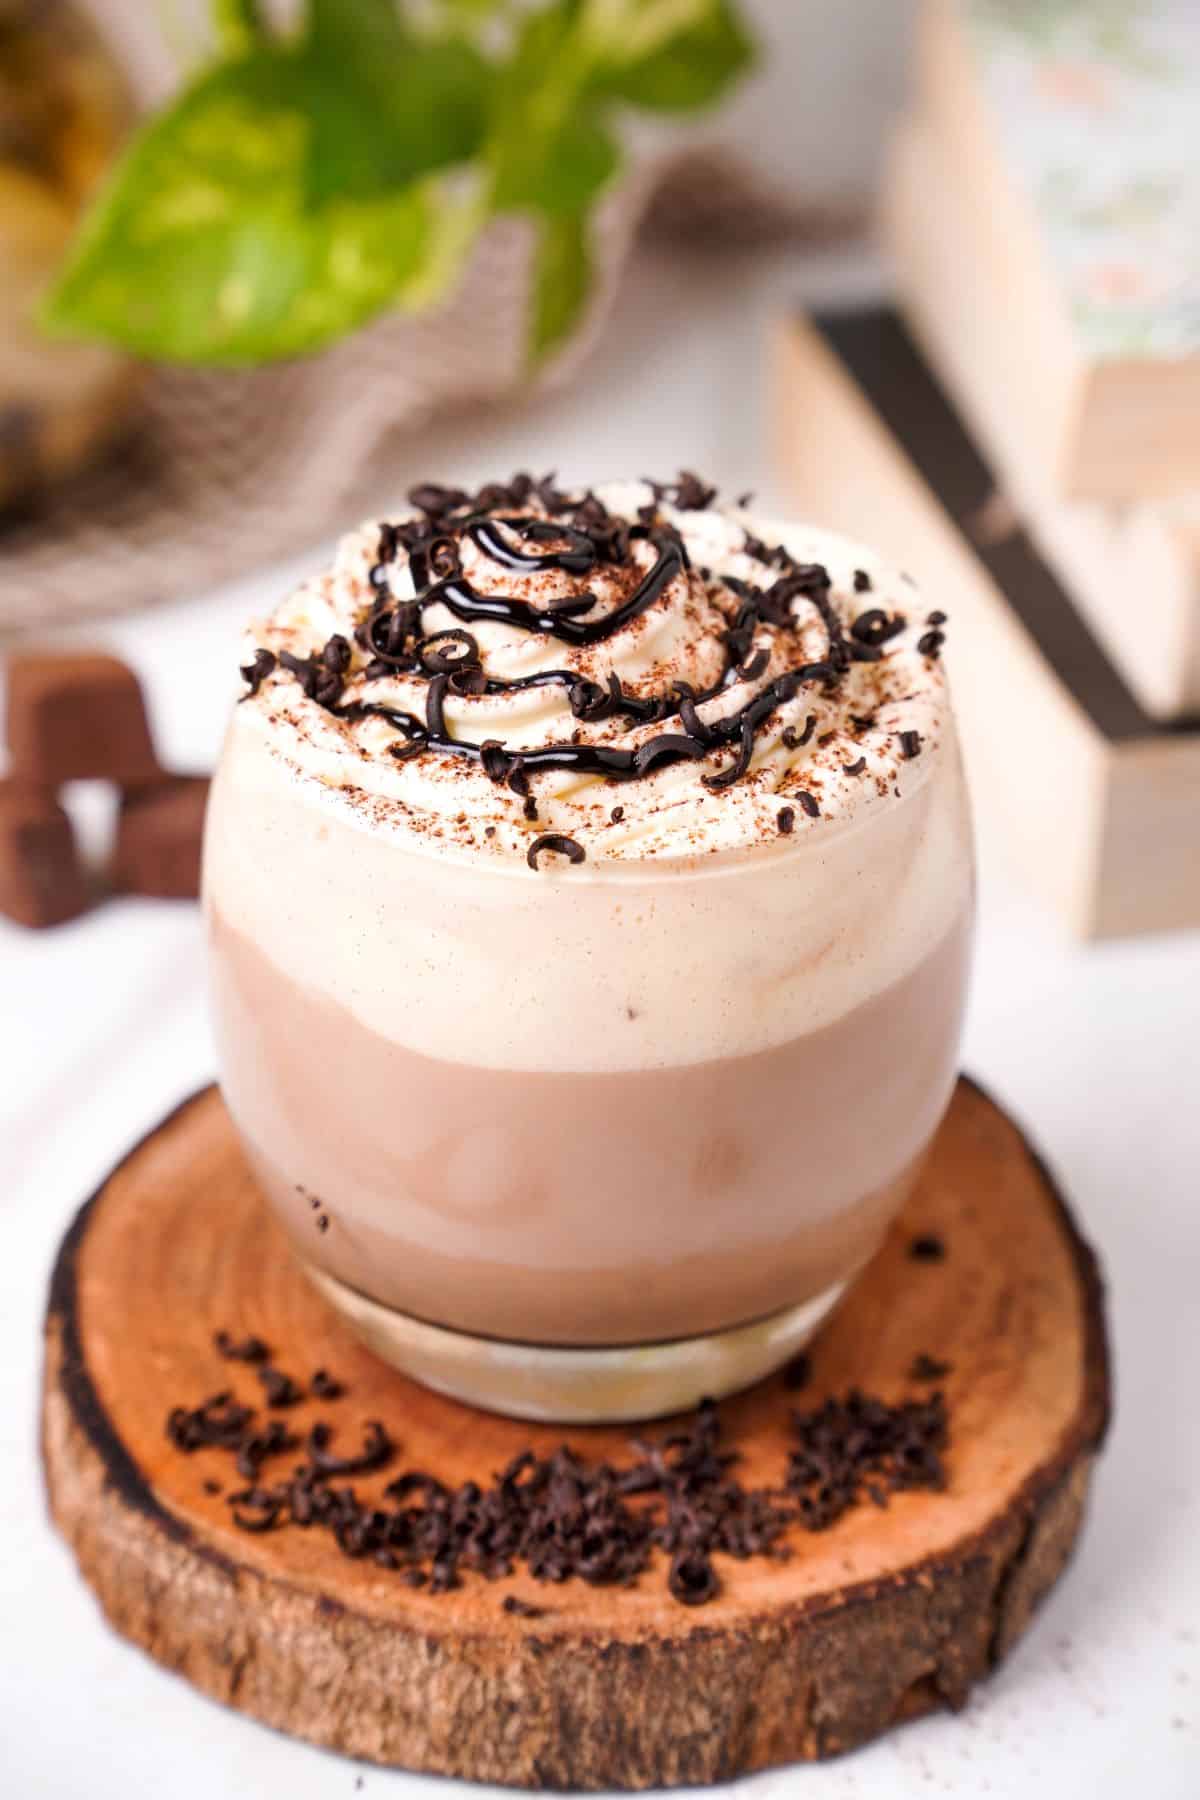 Sugar-free Hot Chocolate on a glass